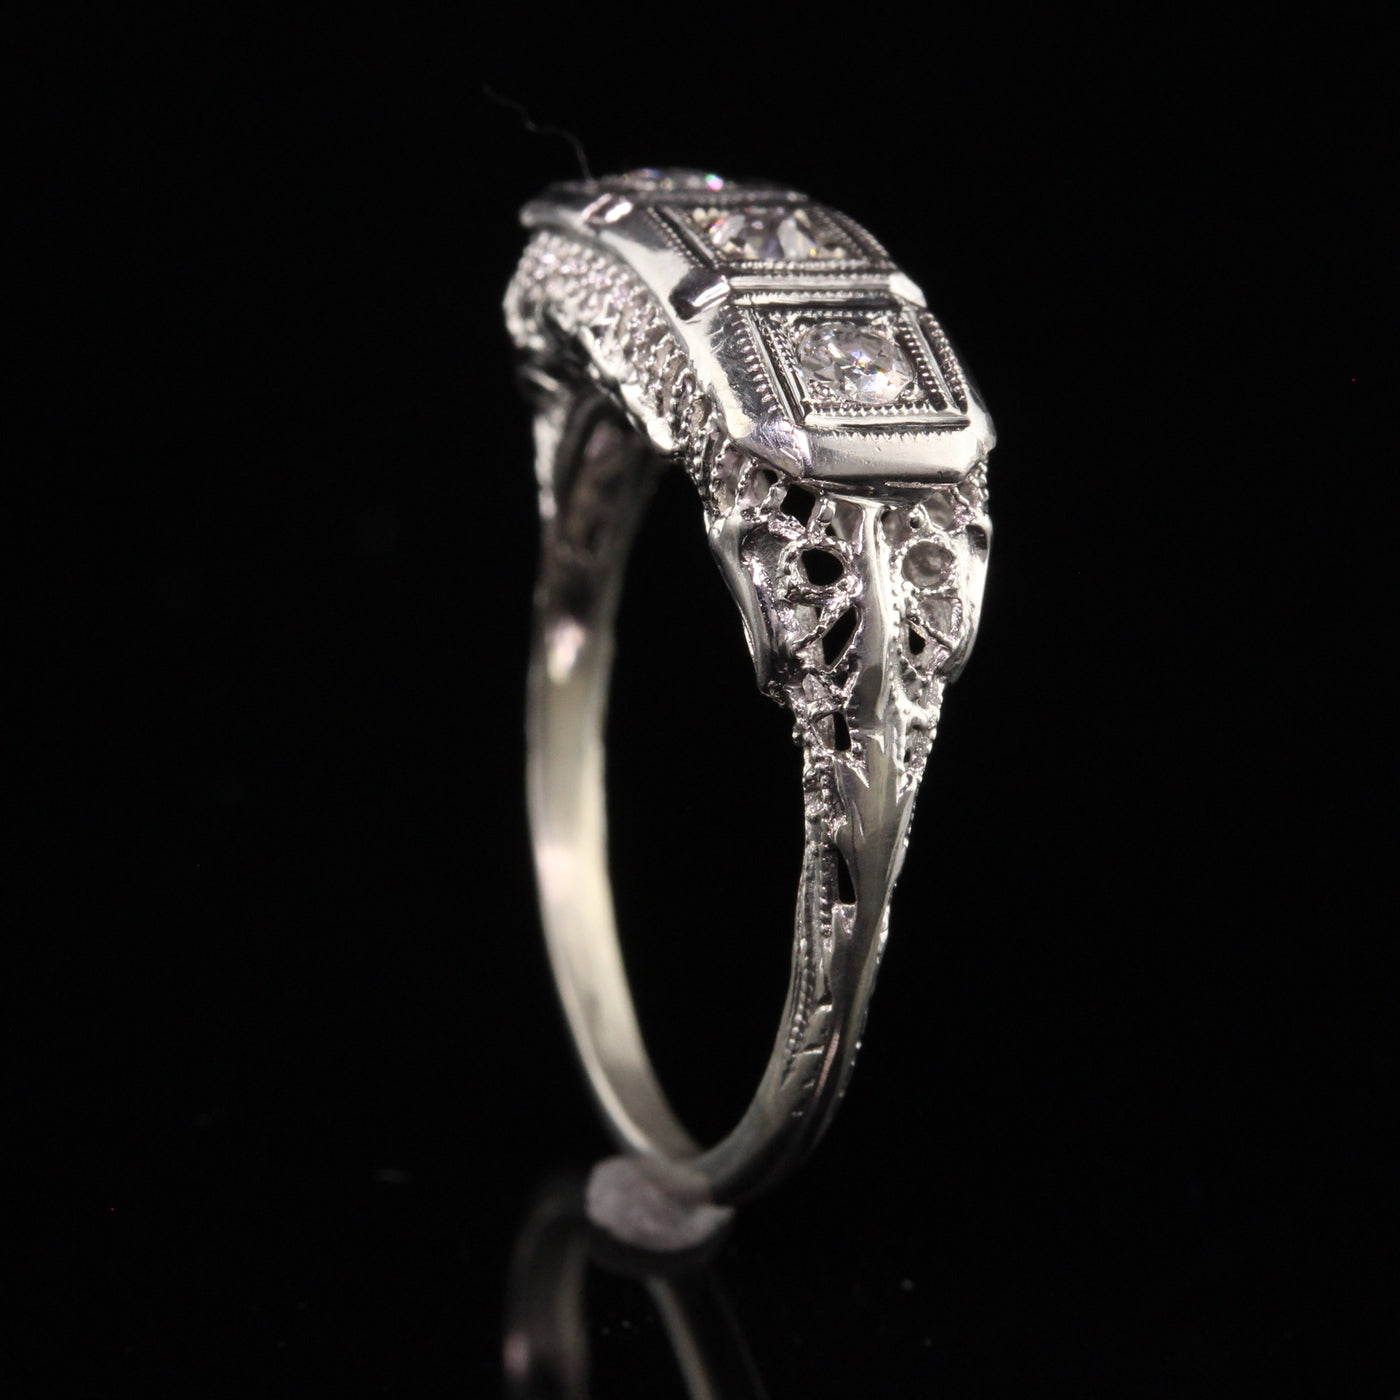 Antique Art Deco 14K White Gold Old European Cut Diamond Three Stone Ring